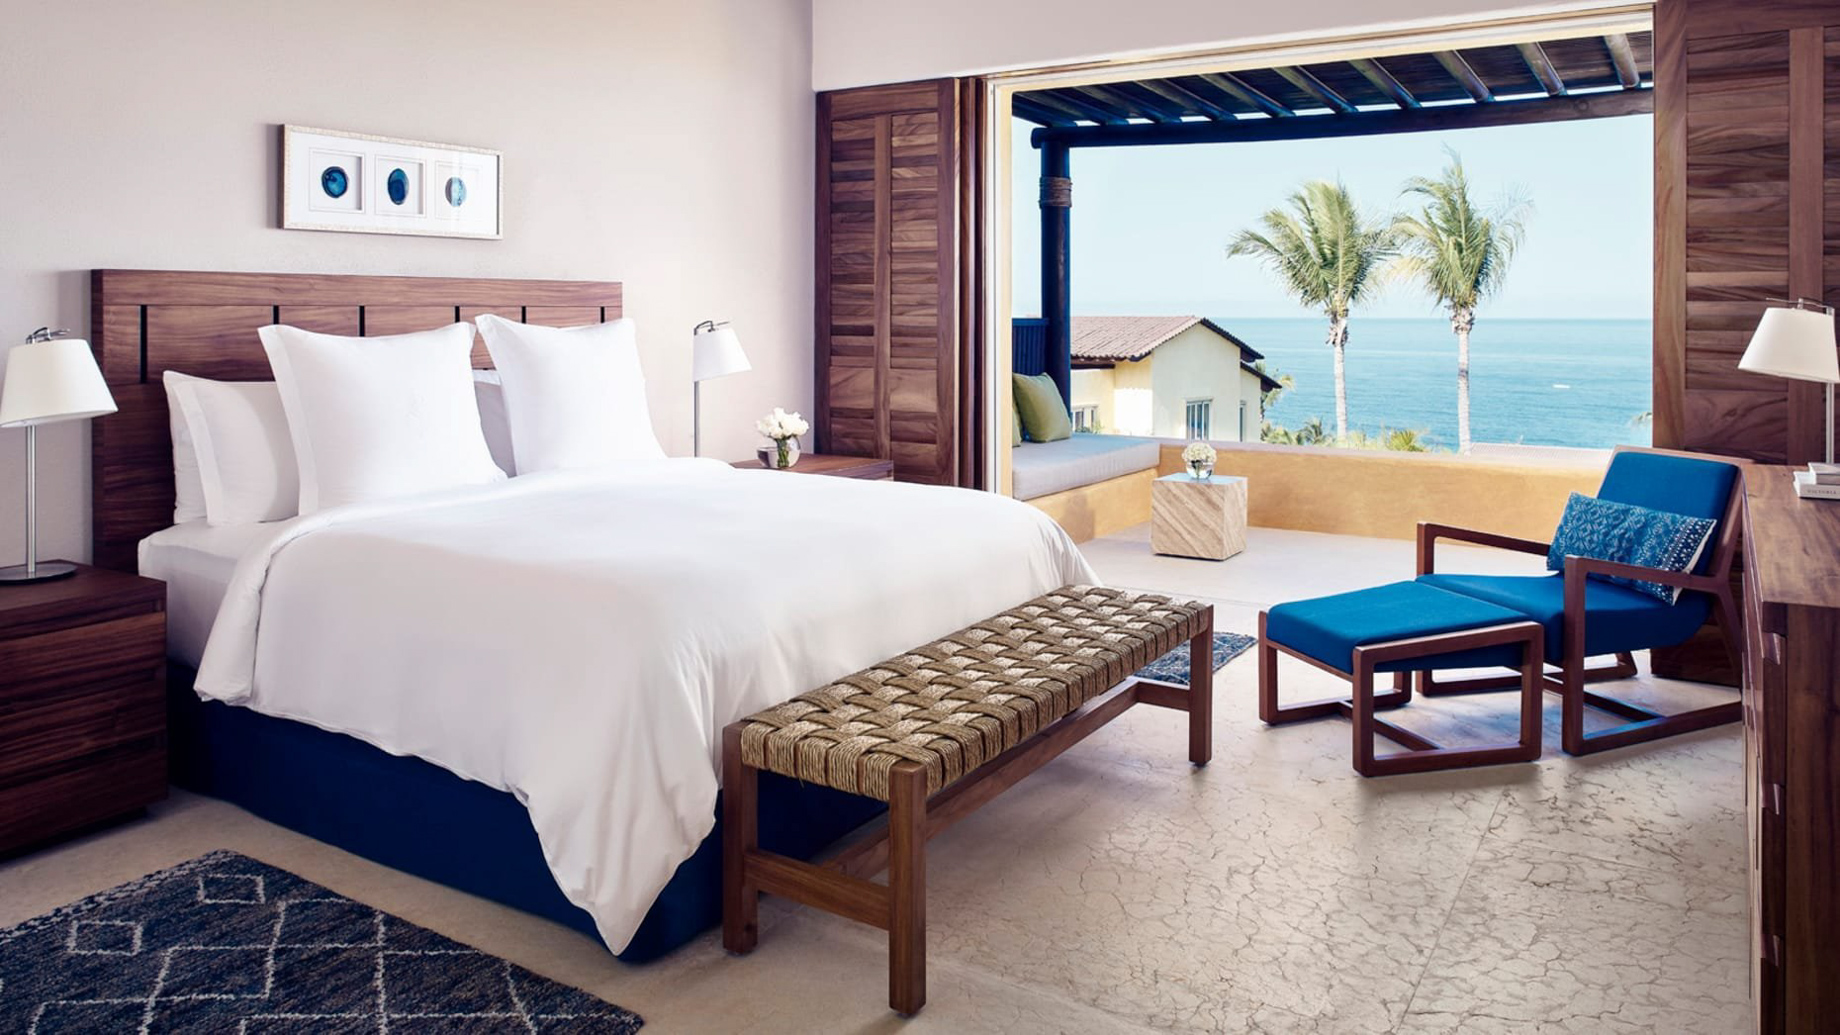 Four Seasons Resort Punta Mita – Nayarit, Mexico – Verano Ocean View Villa Bedroom